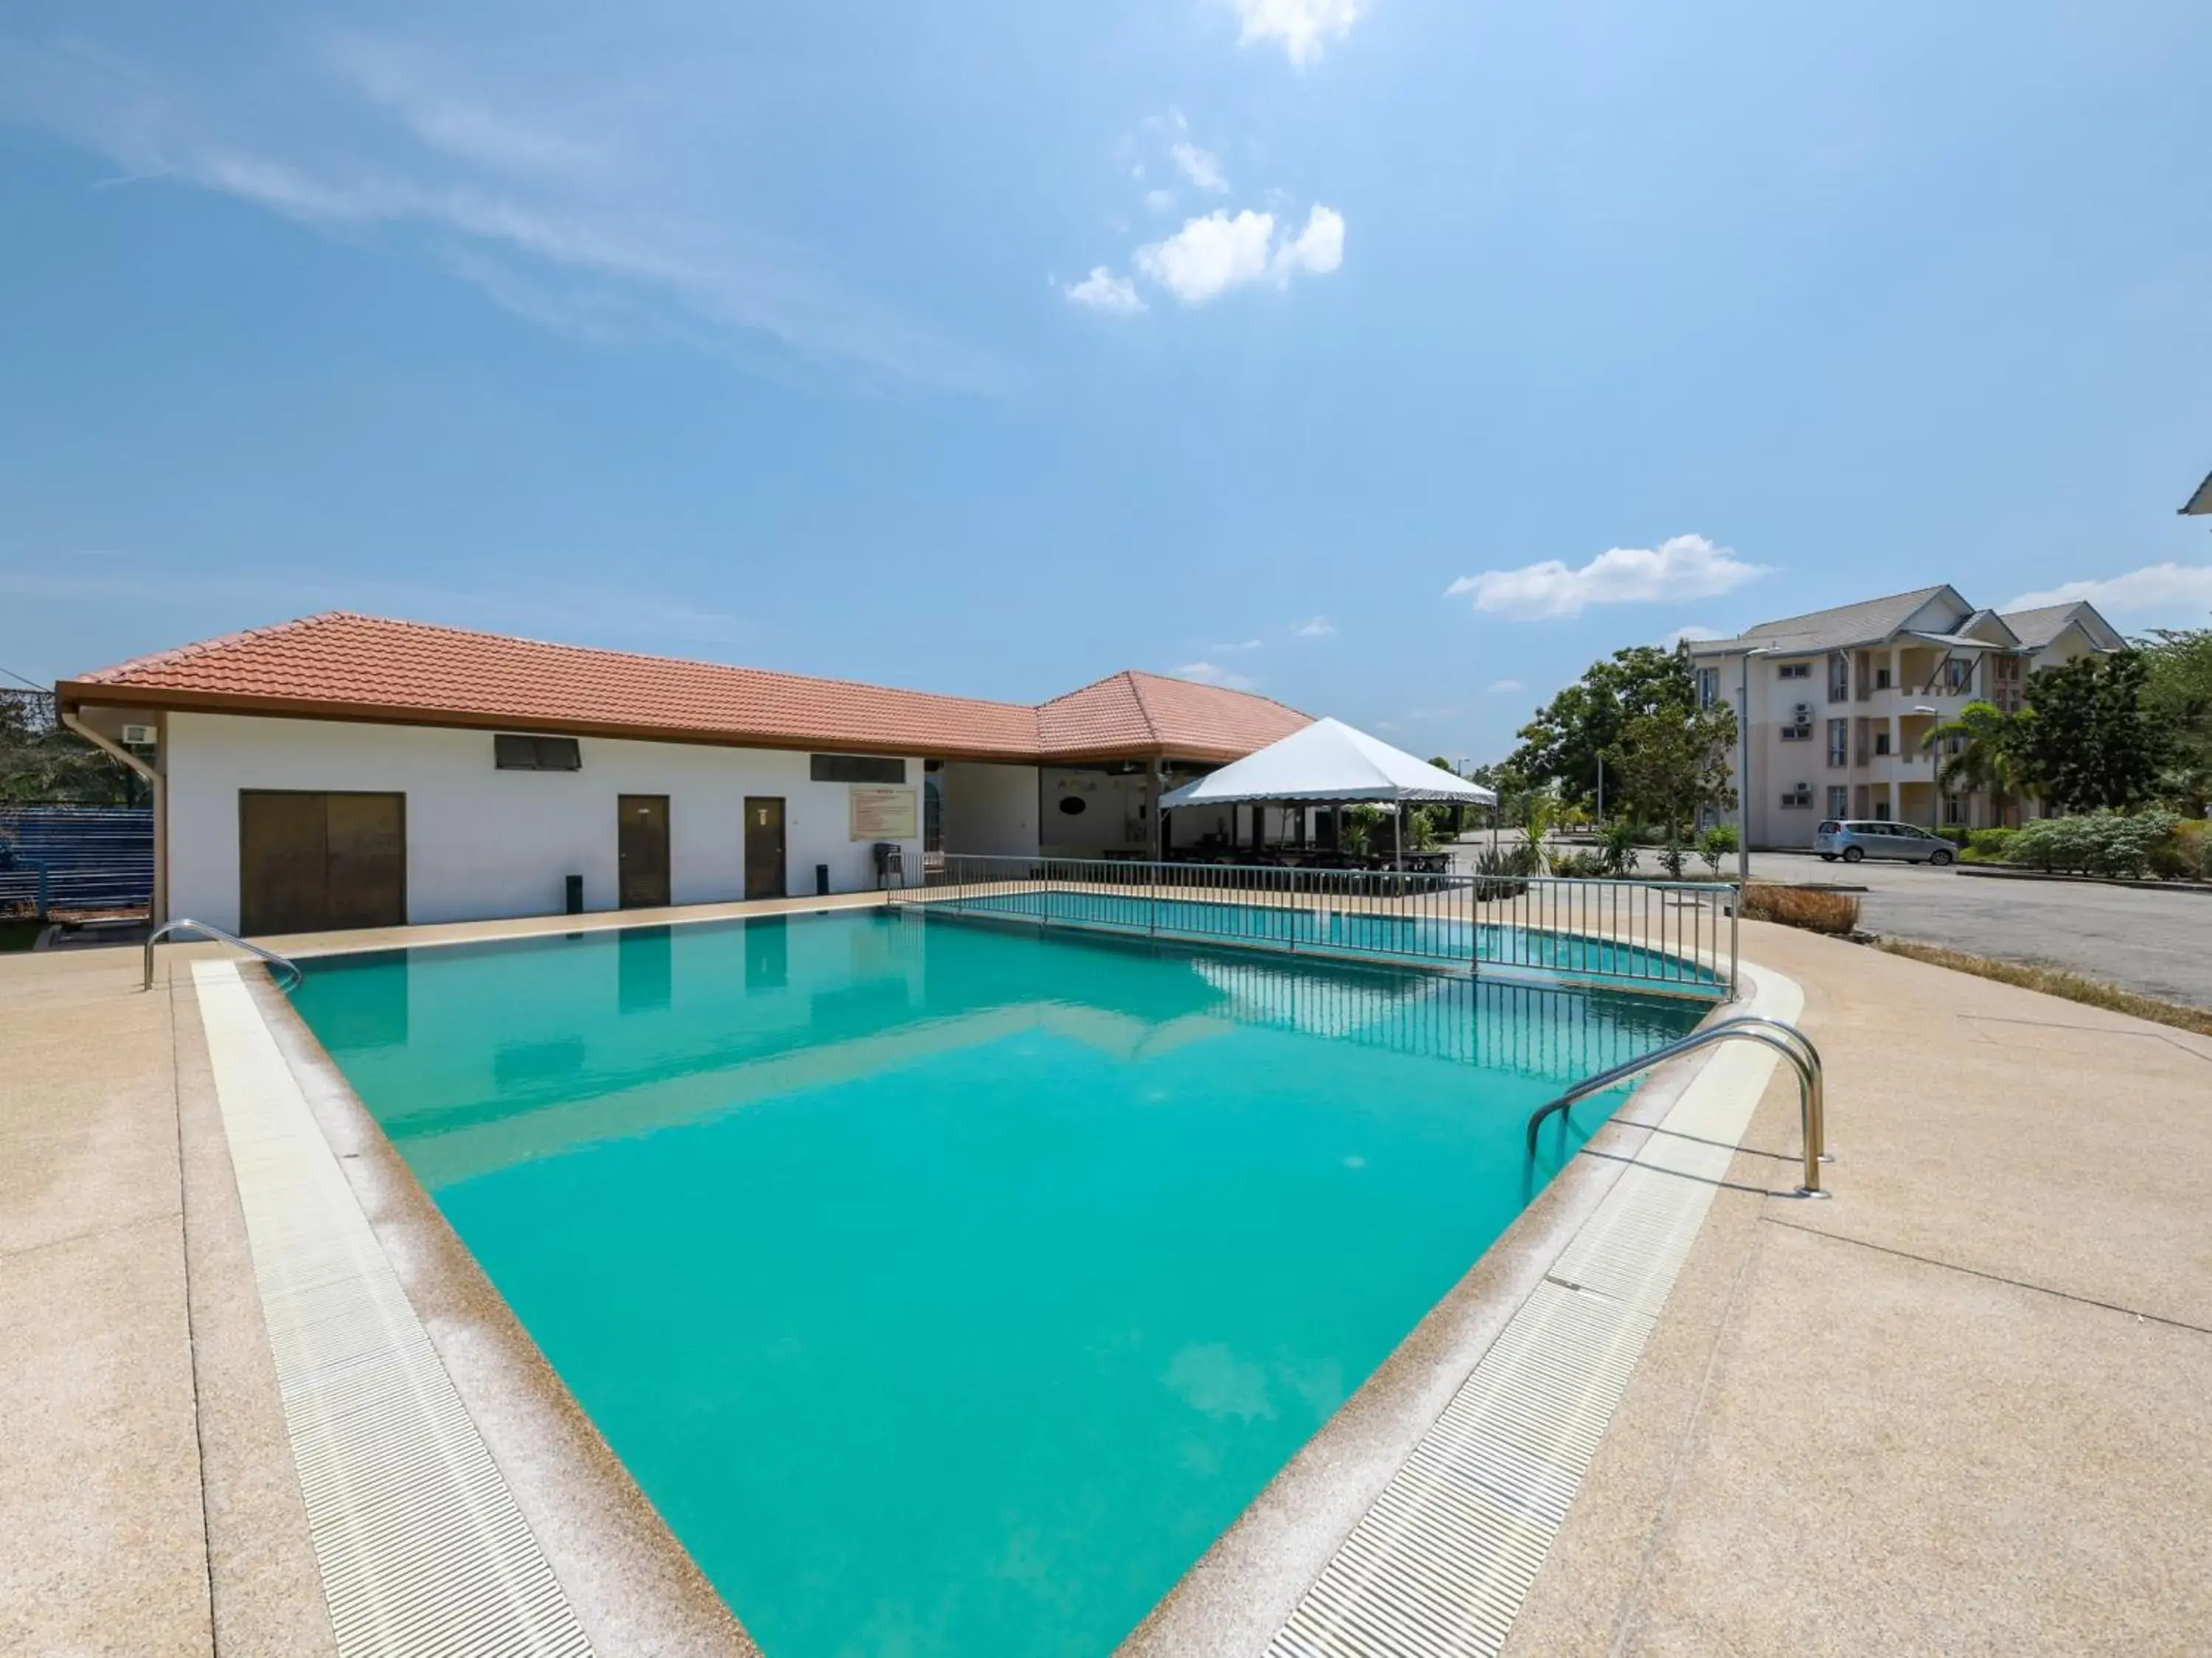 Swimming Pool in Seri Bayu Resort Hotel